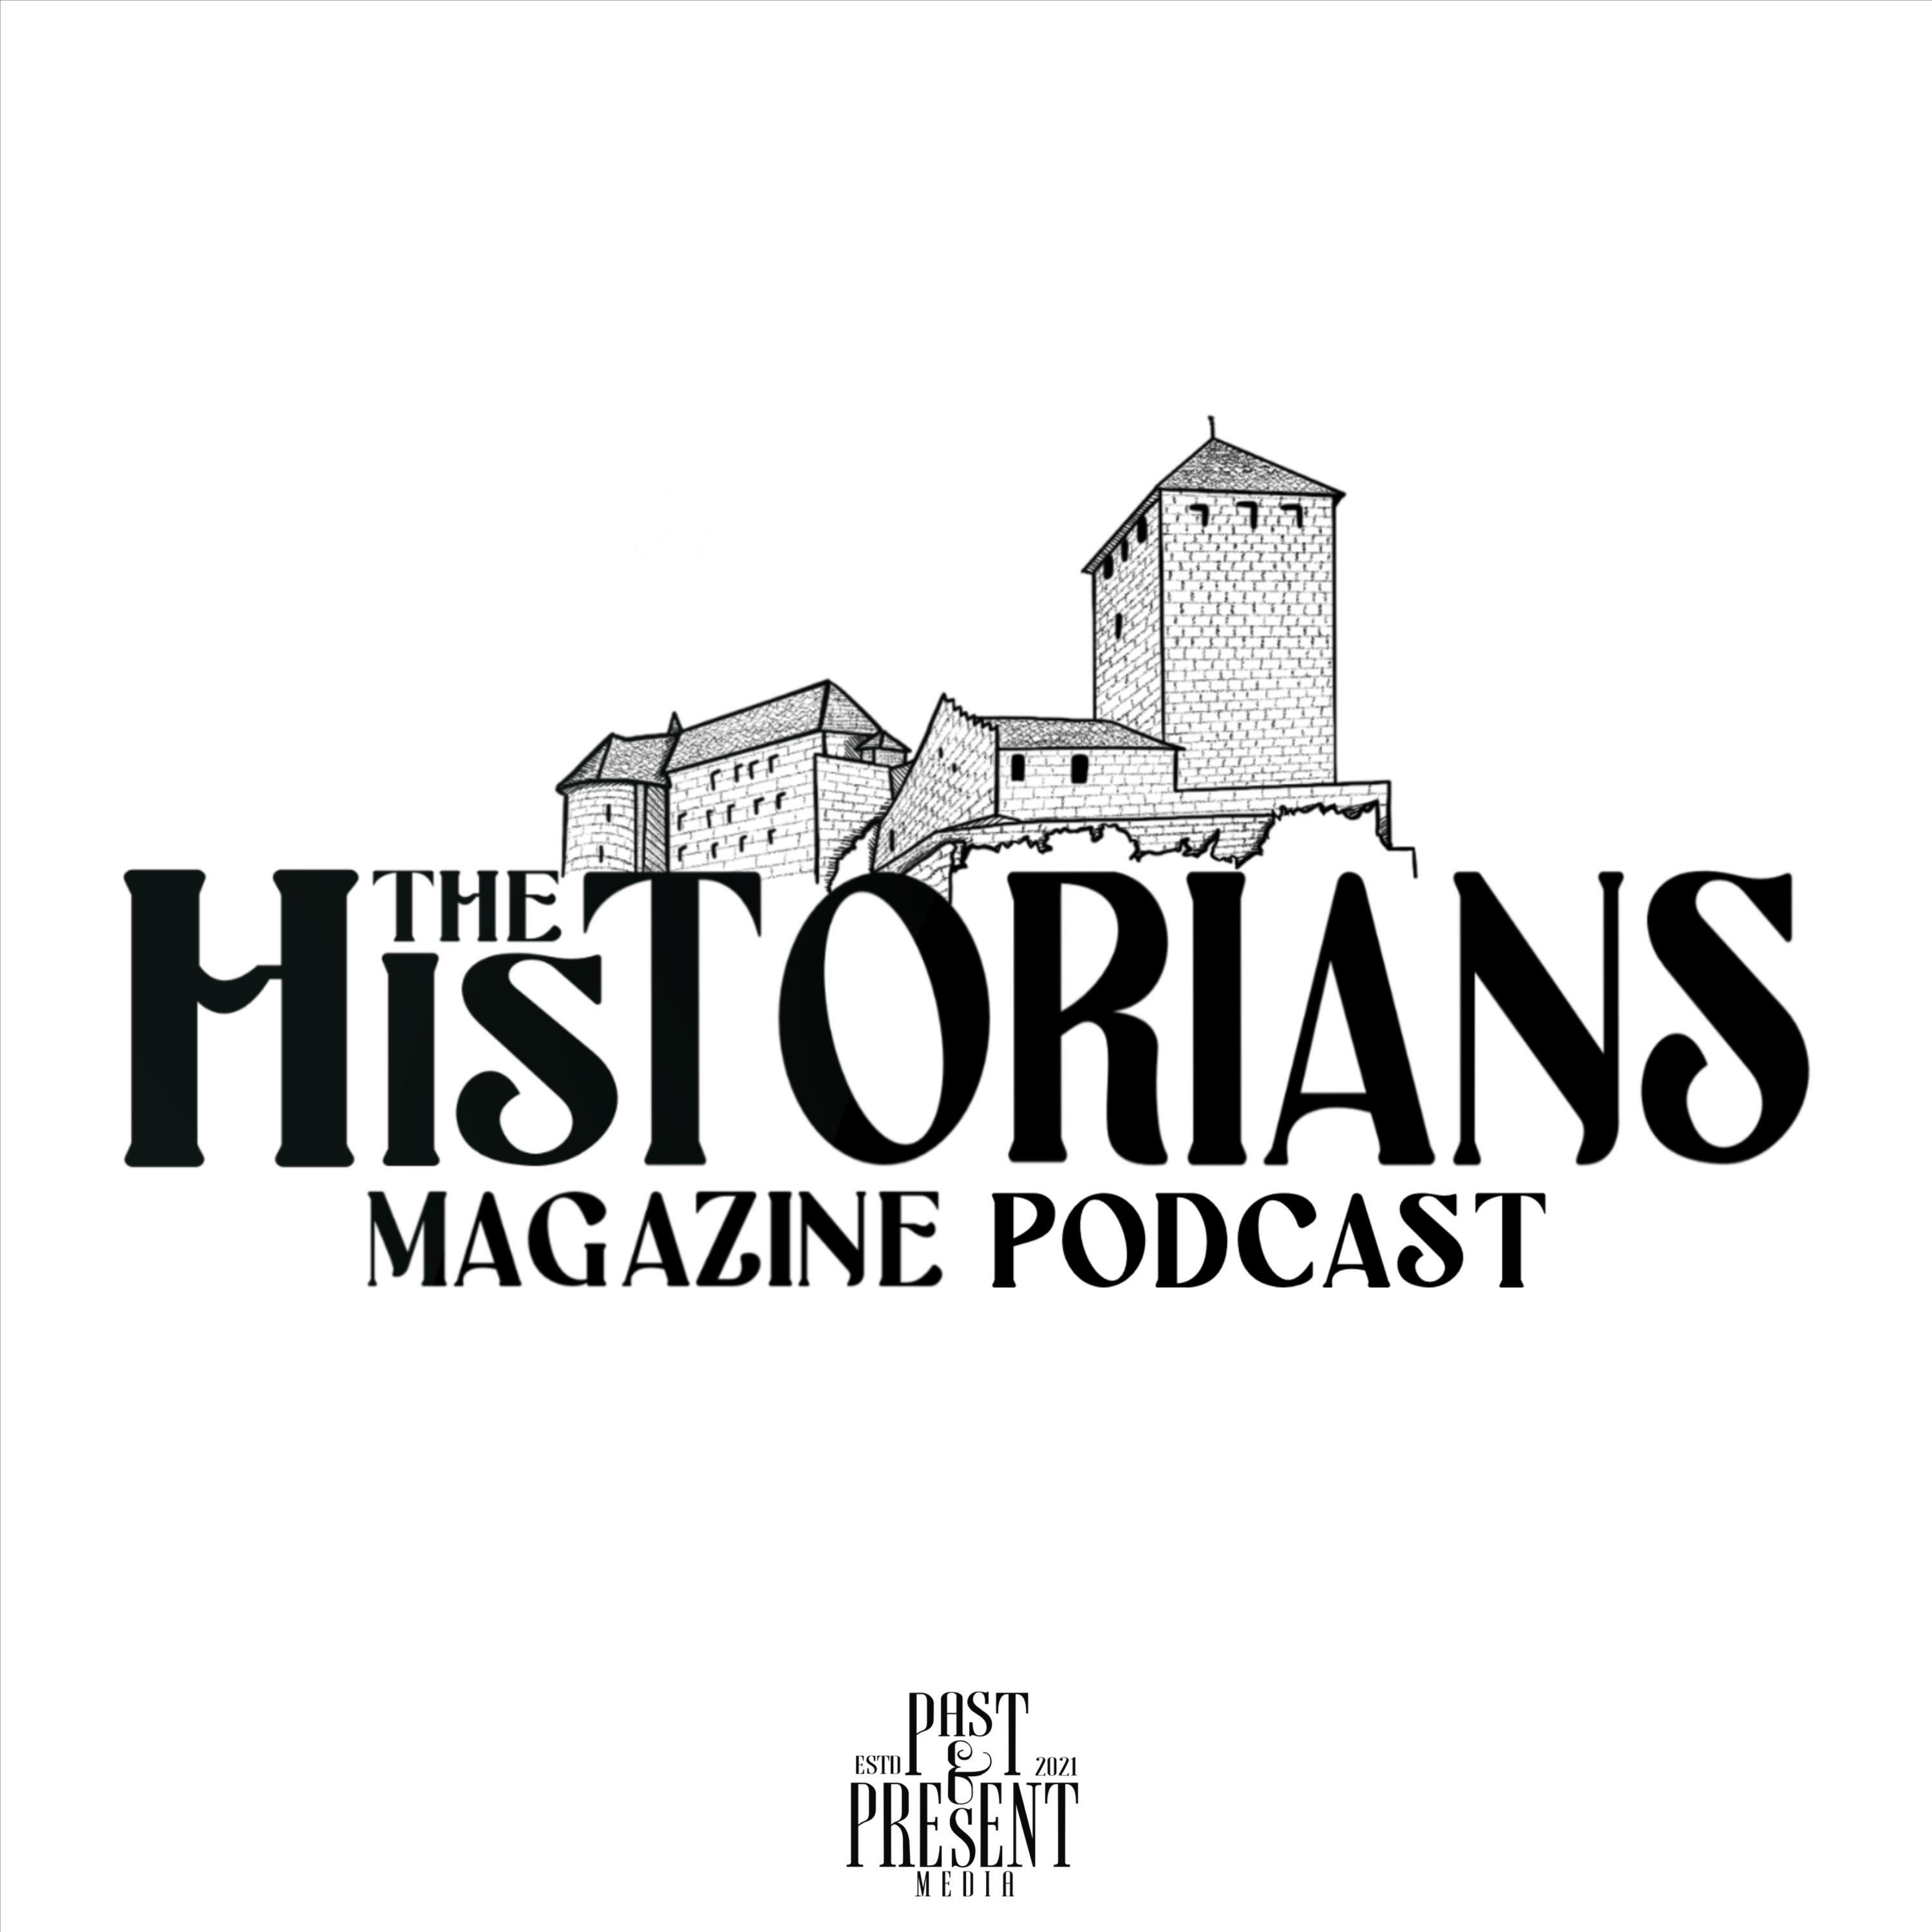 The Historians Magazine Podcast